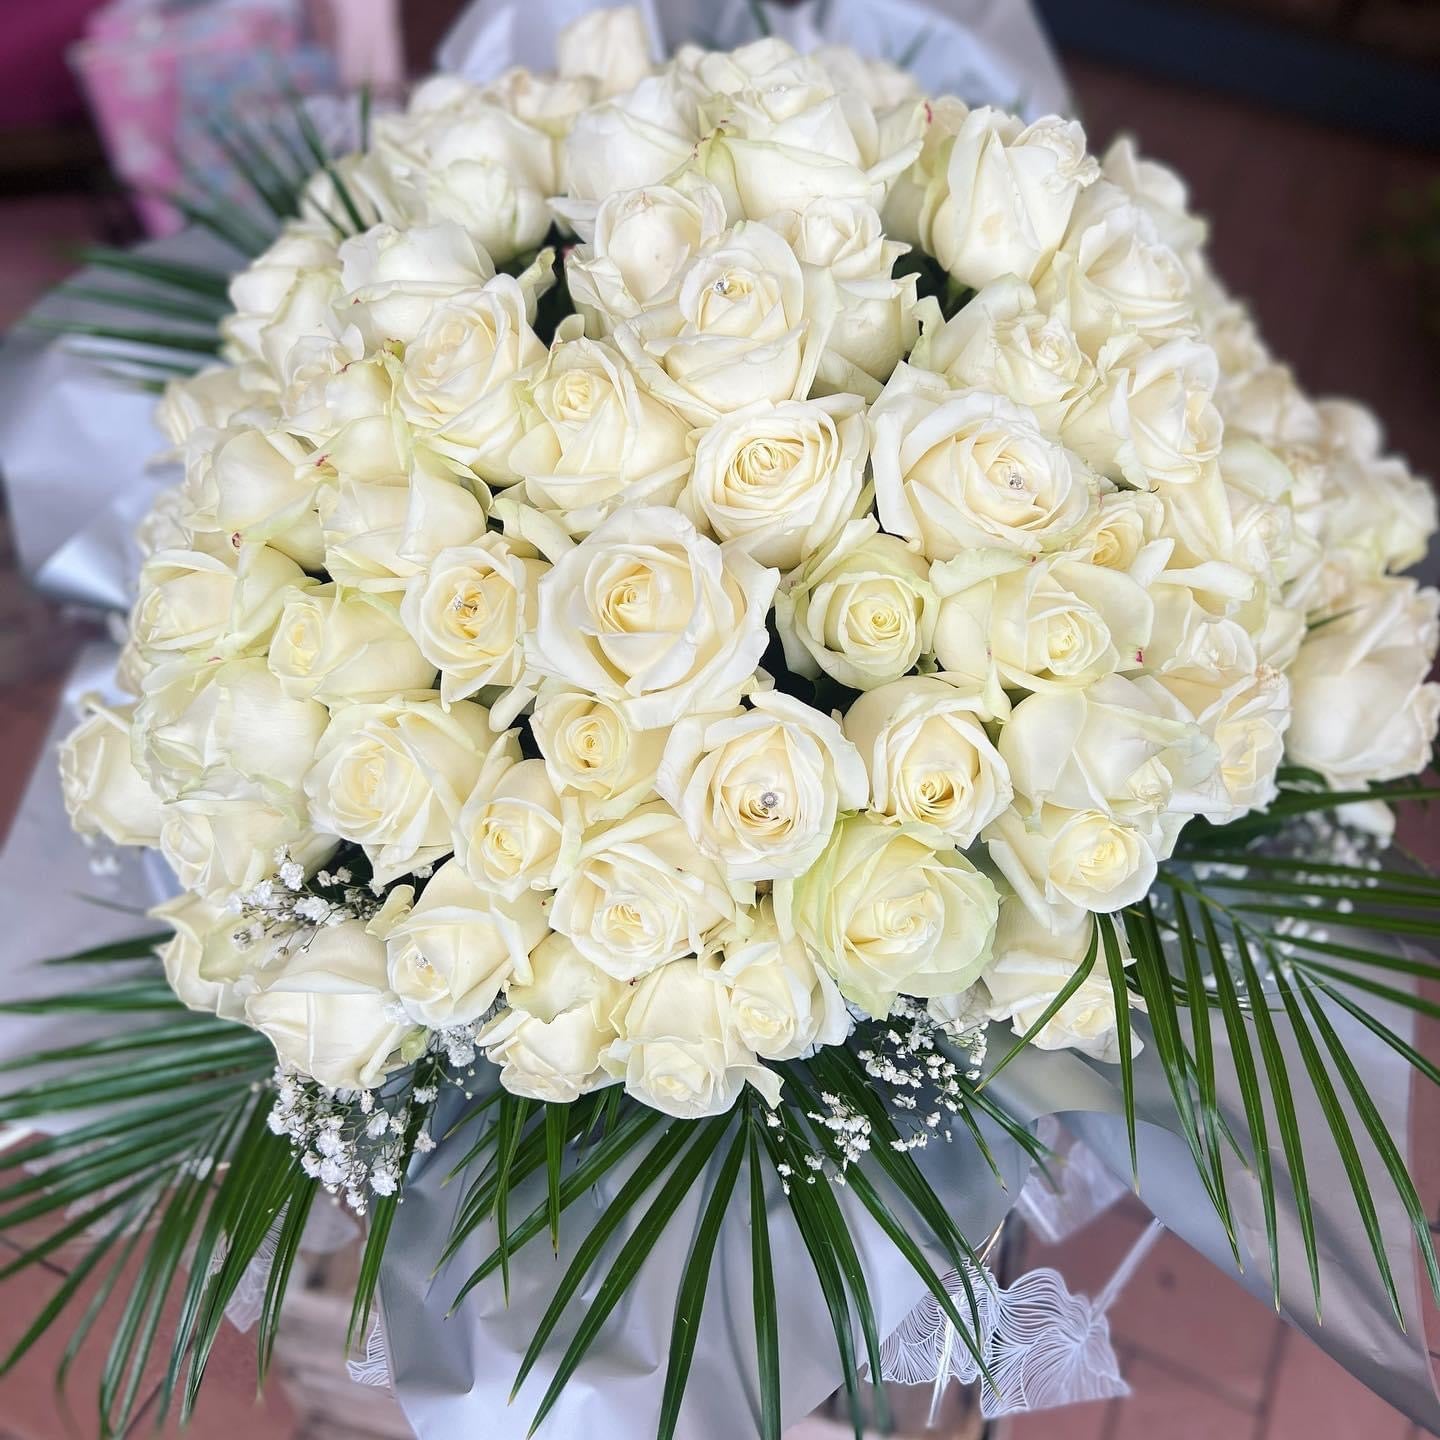 White Rose Bouquet - 10, 20, 50, 100 White Roses – Cherry Blossom